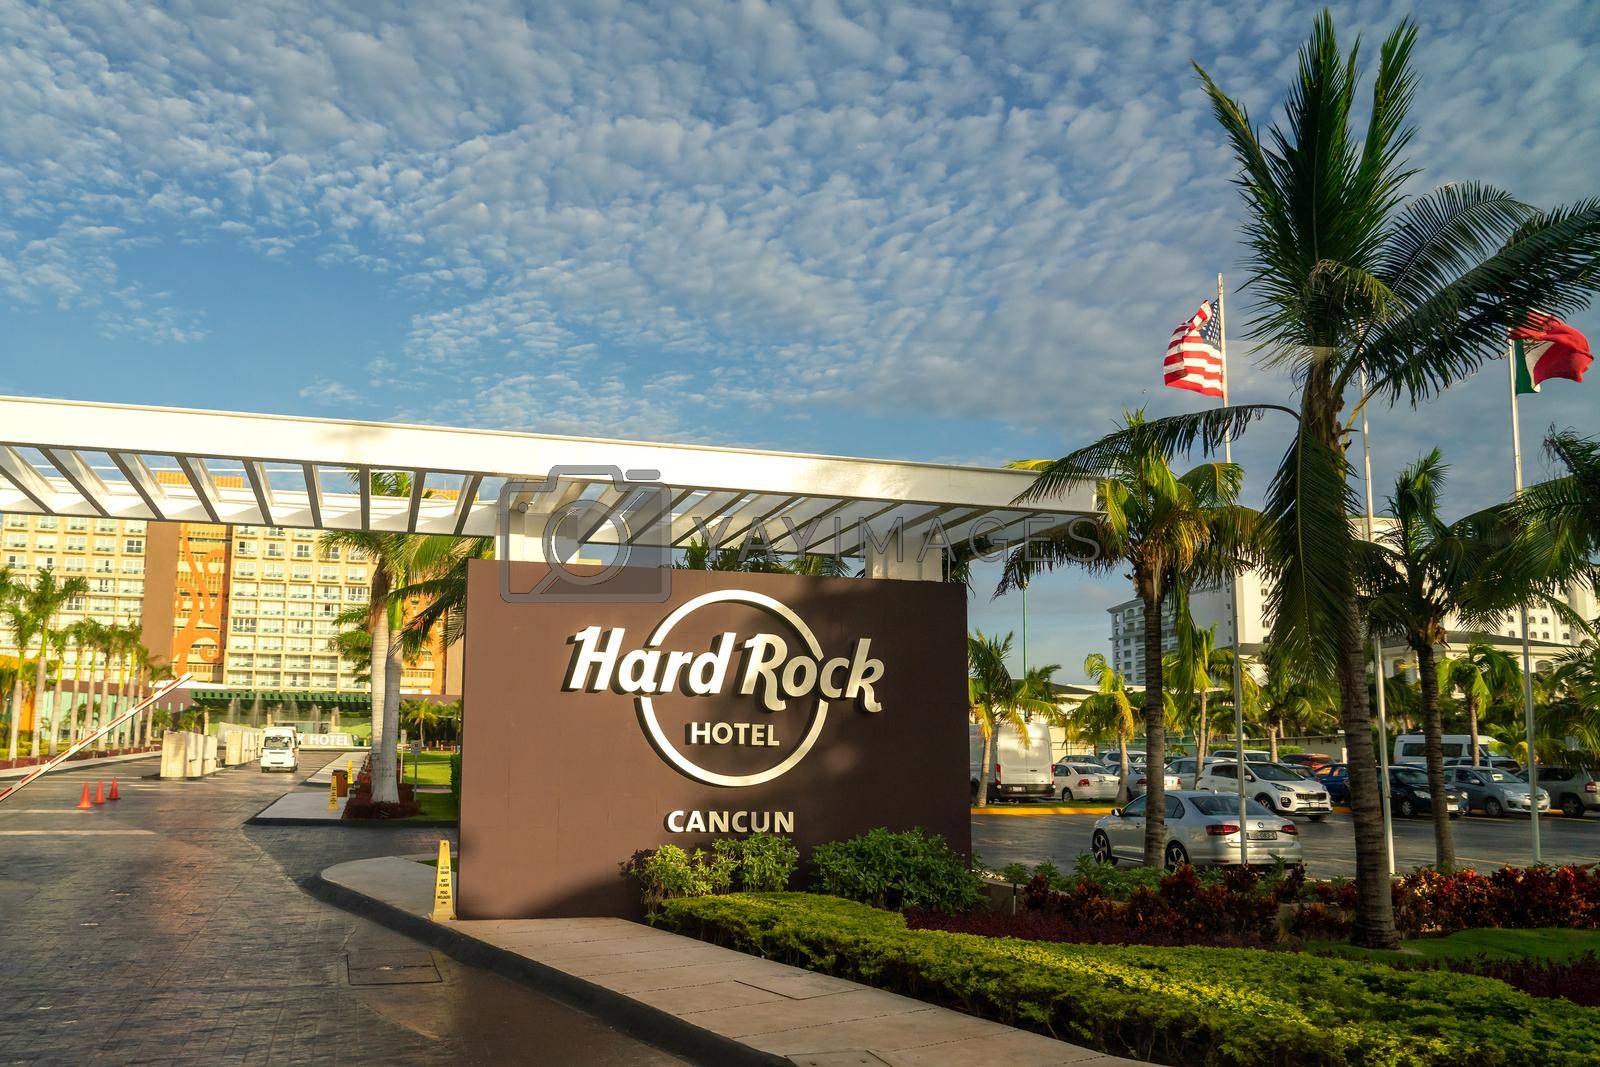 Royalty free image of Cancun, Mexico - 16 September 2021: Hard Rock Cancun Hotel sign at the entrance of hotel. Luxury resort on Riviera Maya, Yucatan Peninsula by Mariakray